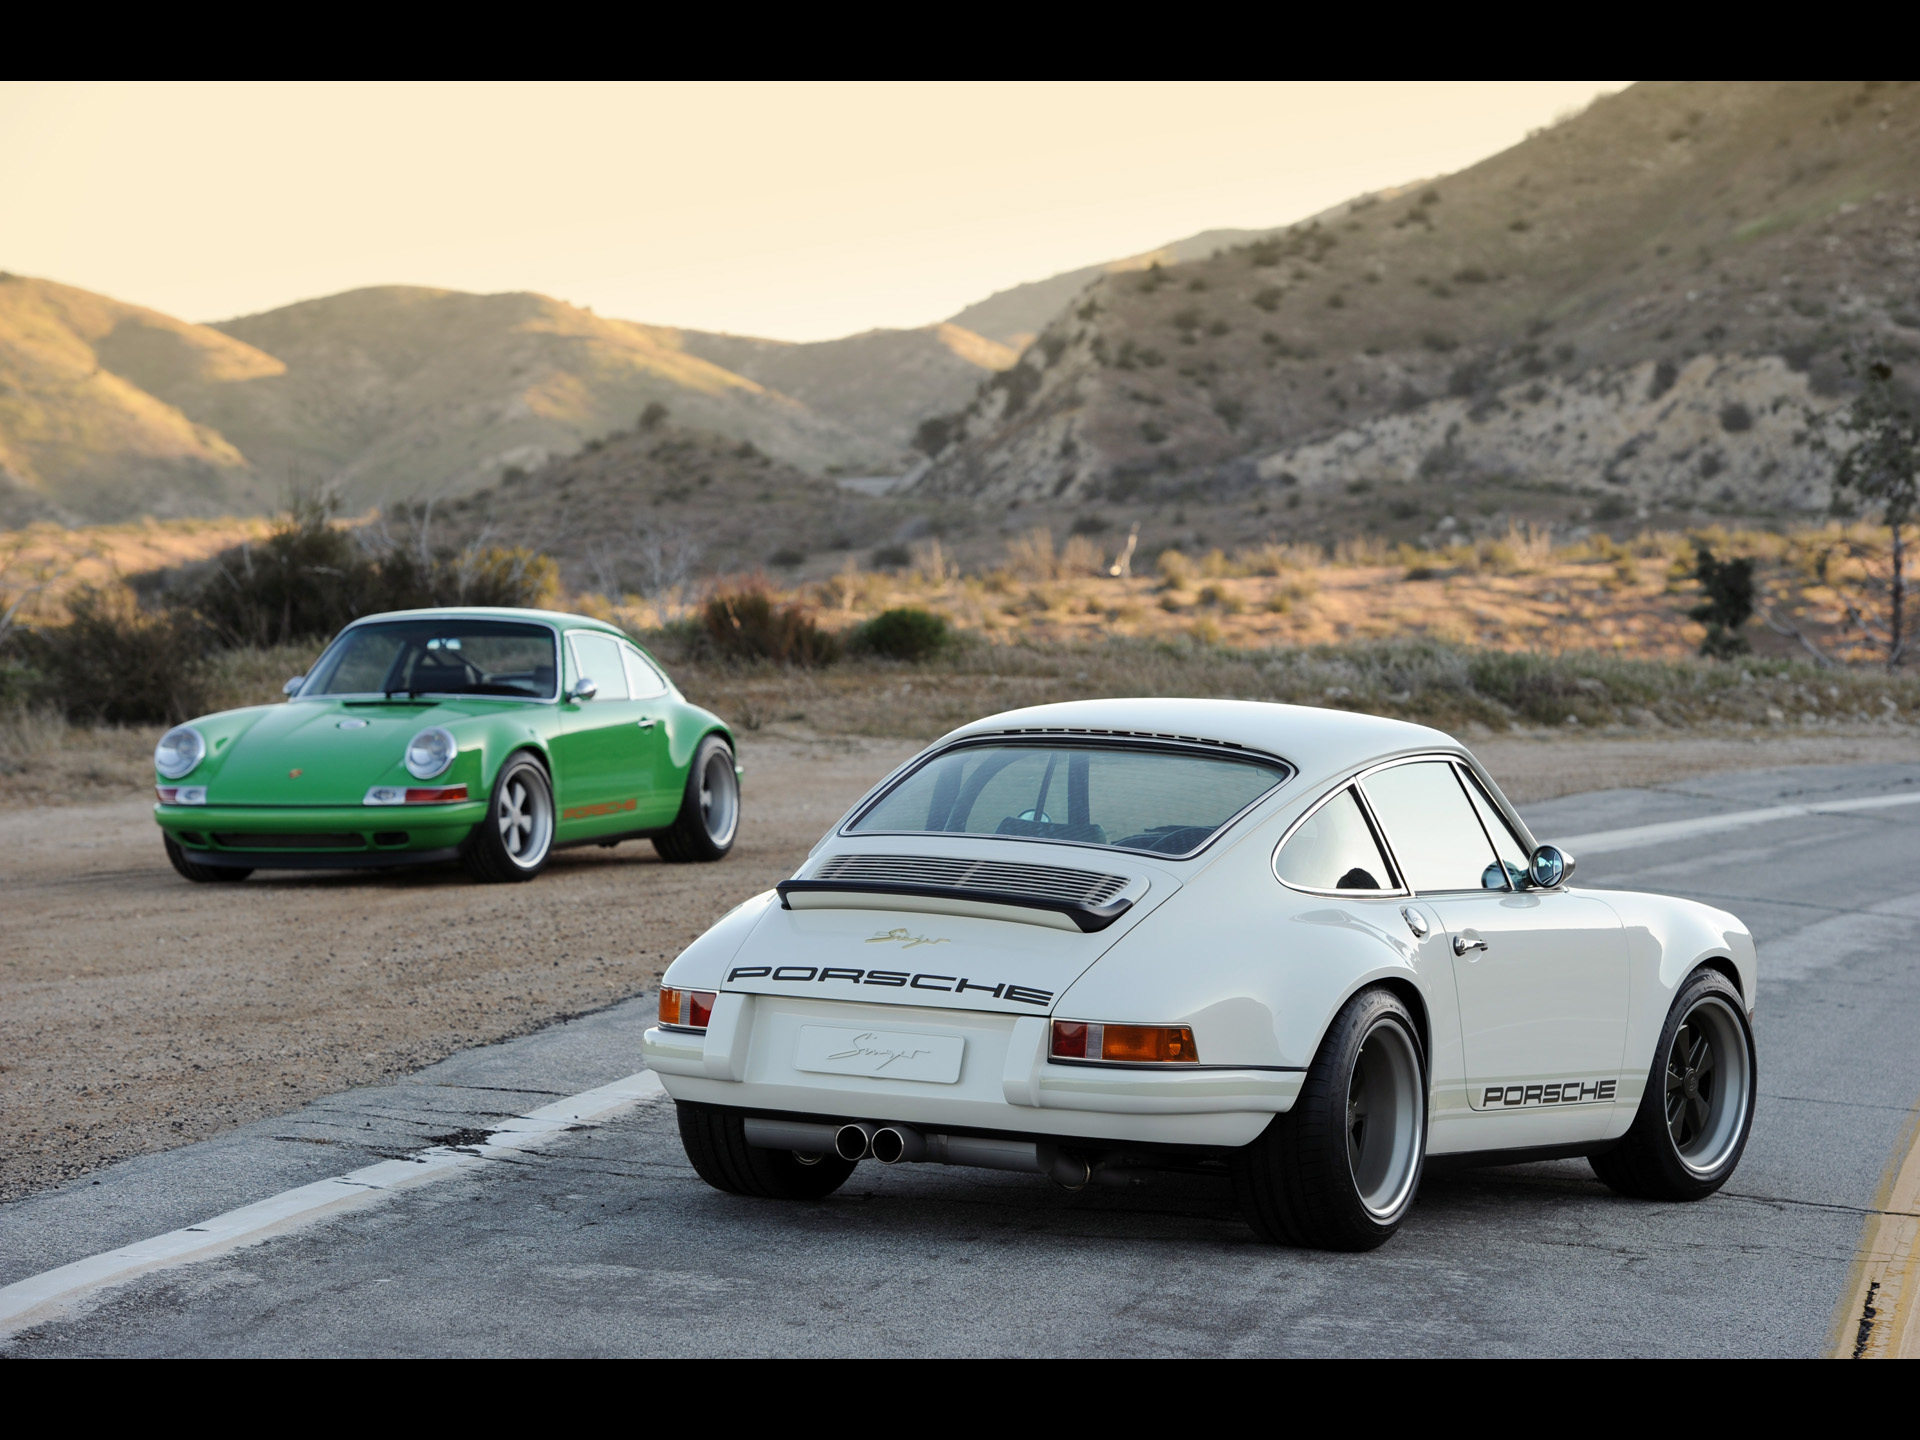 Singer Porsche 911 White Duo   Cars Wallpapers Best HD Wallpapers 1920x1440